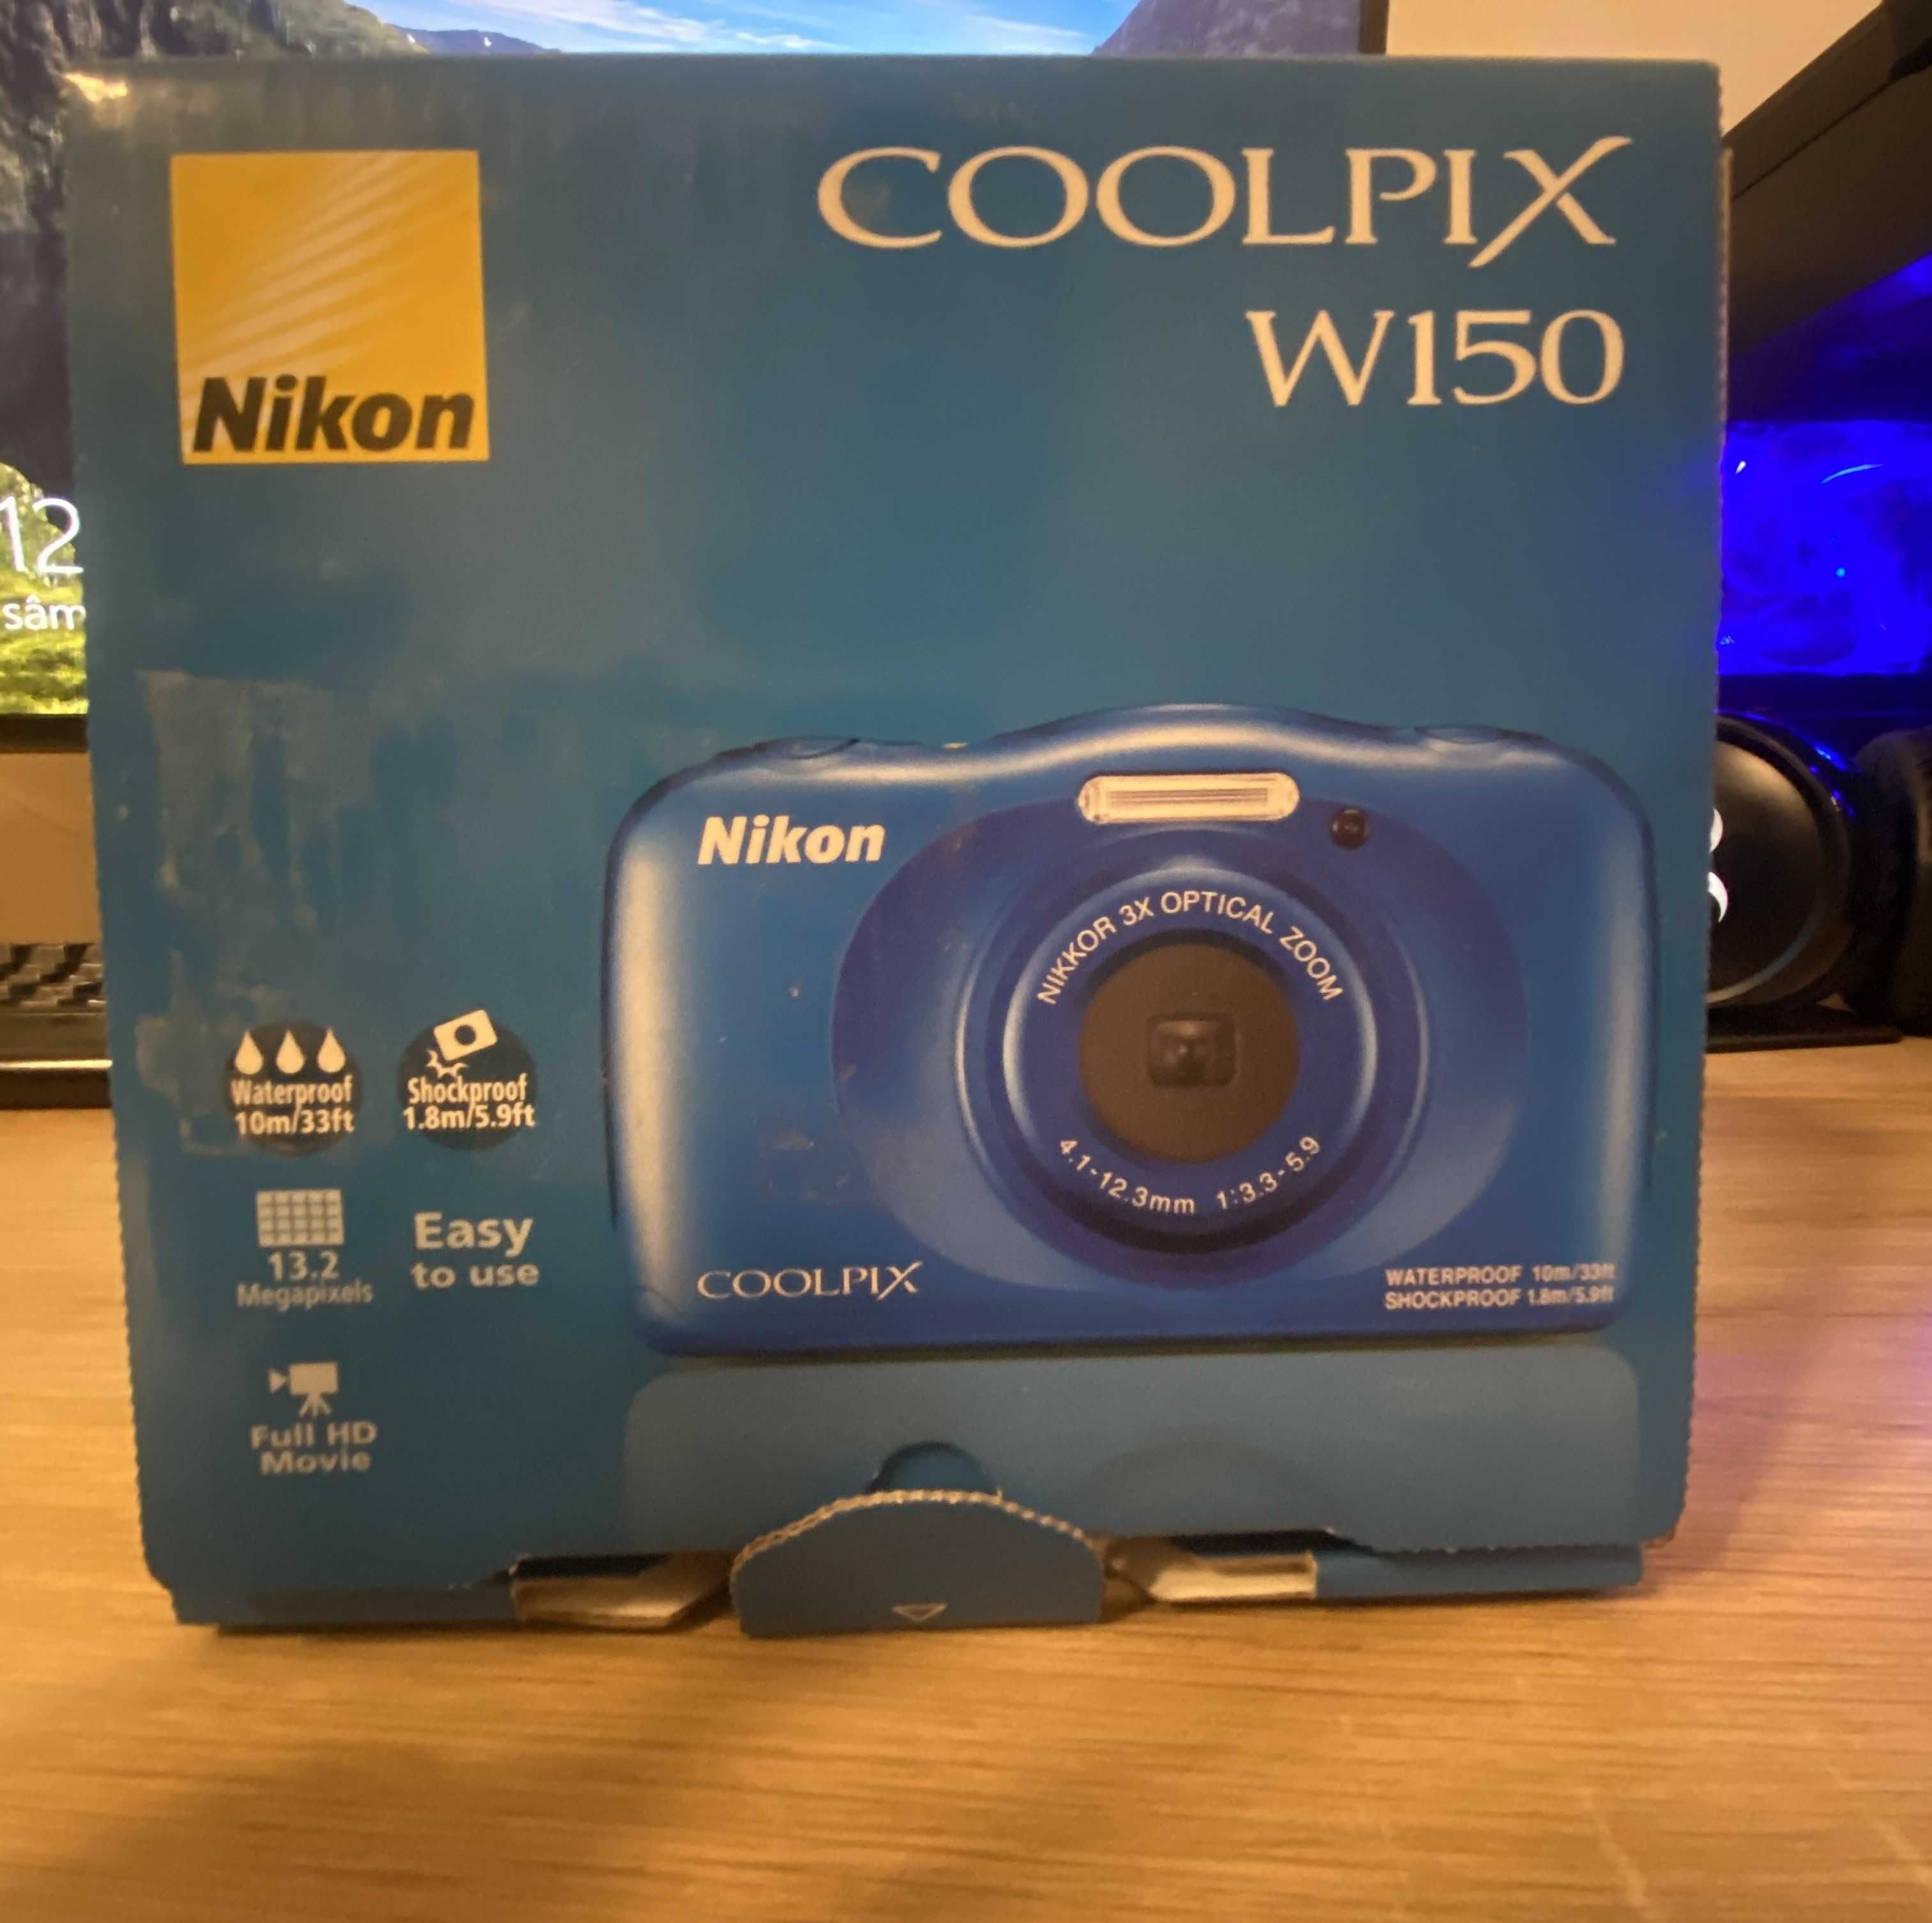 Aparat foto digital subacvatic Nikon Coolpix W150, 13.2MP, Waterproof